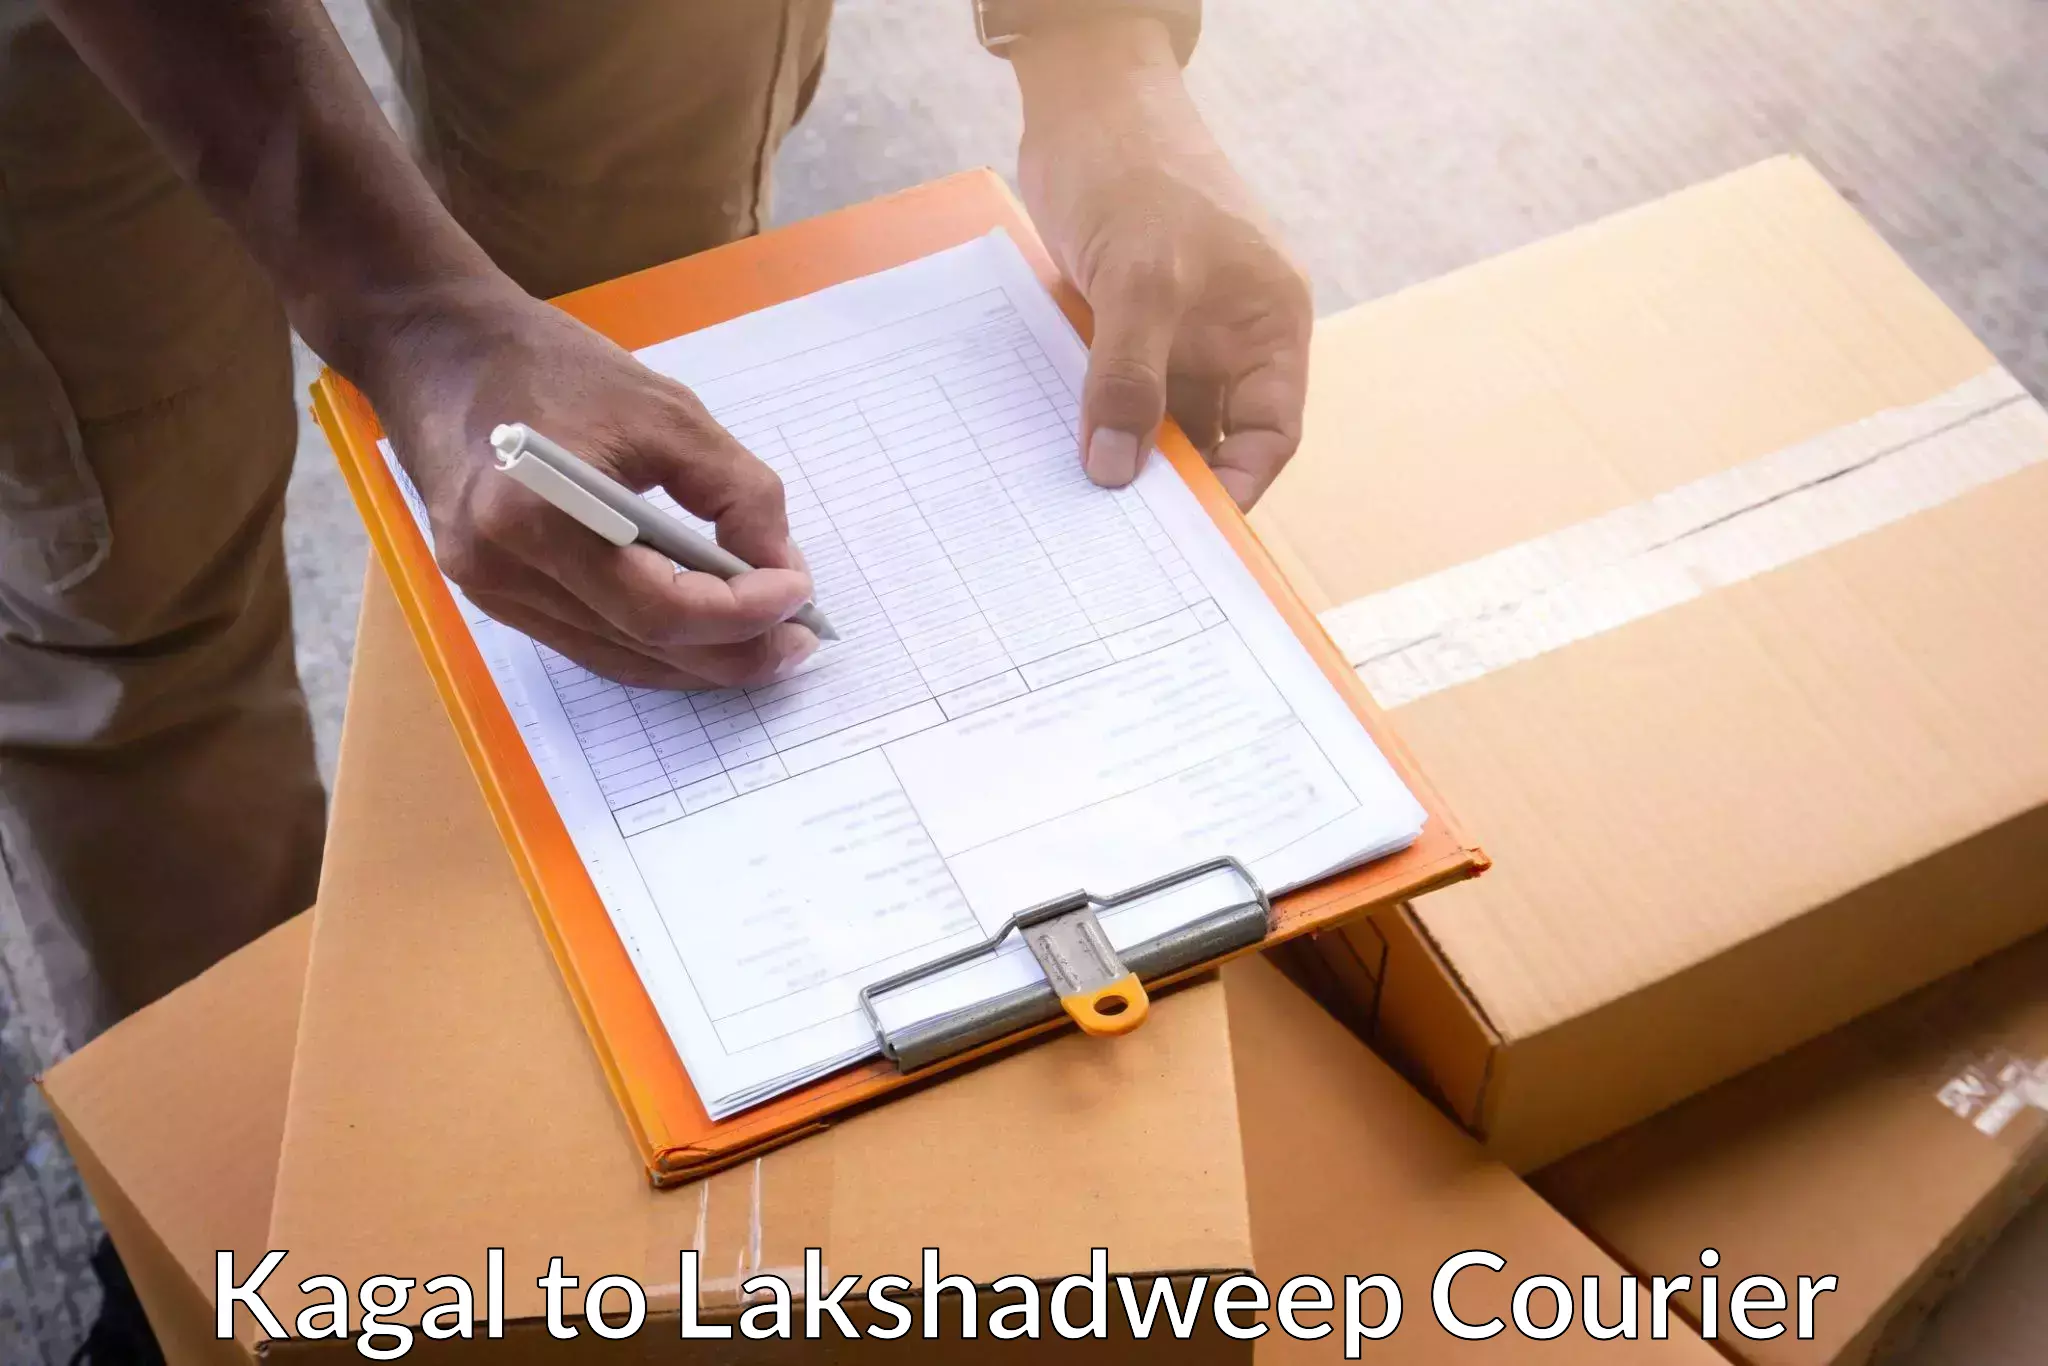 High-speed parcel service Kagal to Lakshadweep